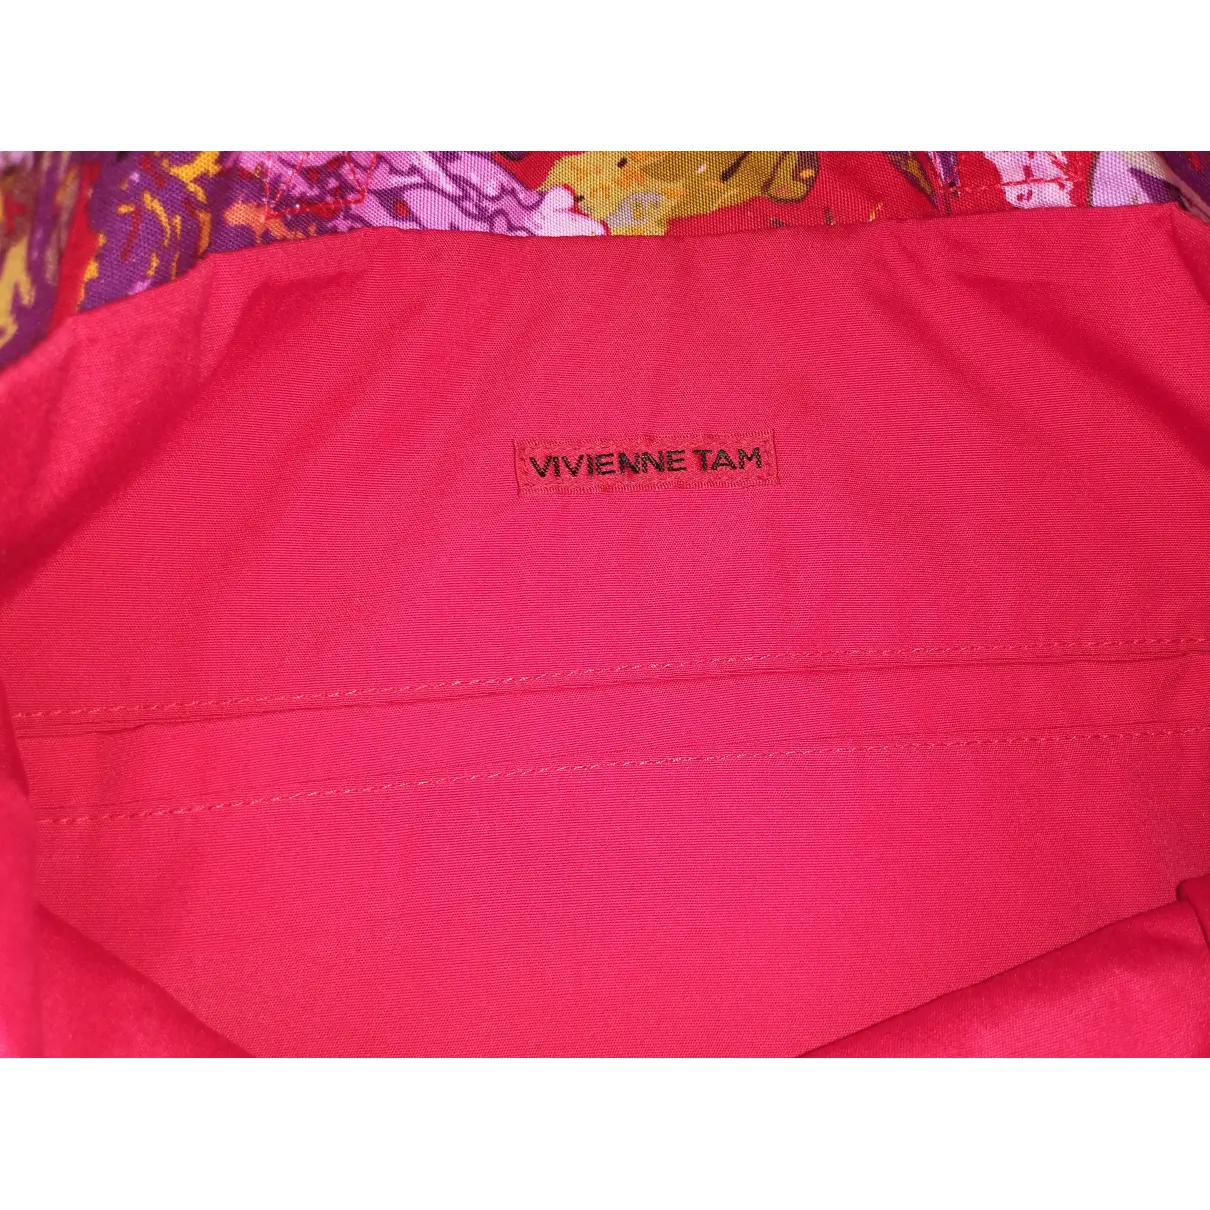 Luxury Vivienne Tam Handbags Women - Vintage